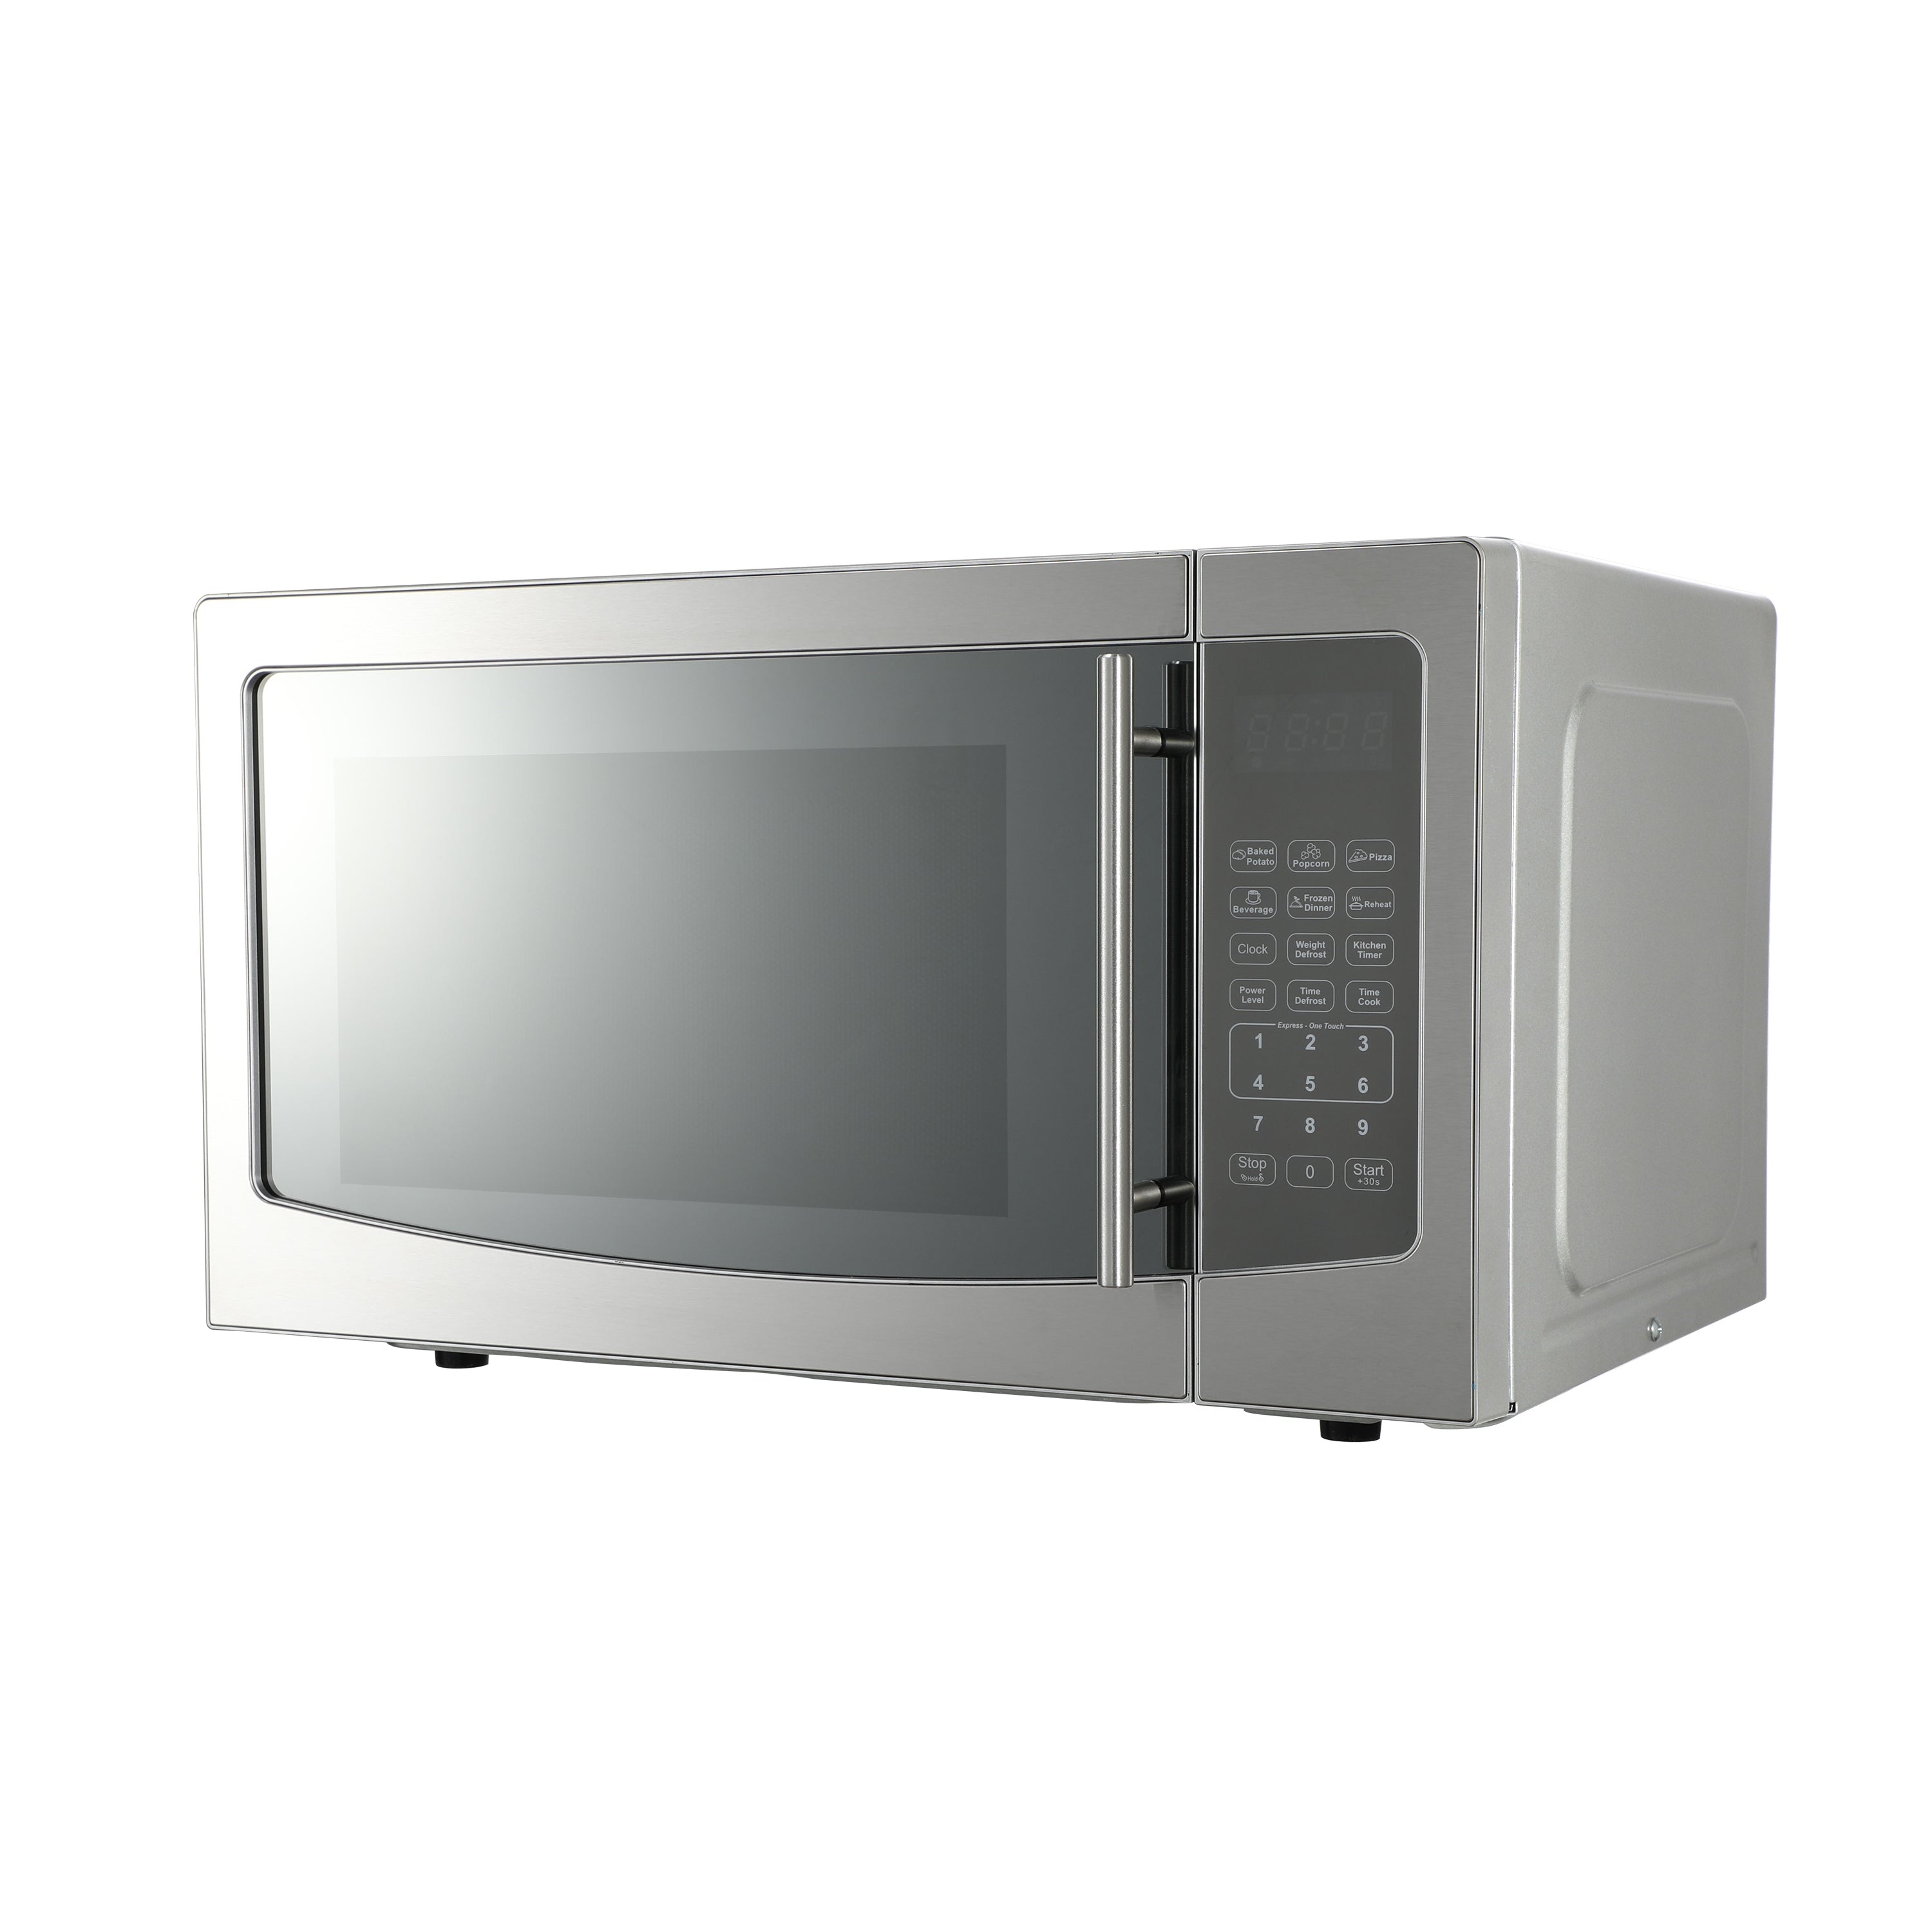 Avanti - MT116V4M, Avanti 1.1 cu. ft. Microwave Oven, in Stainless Steel